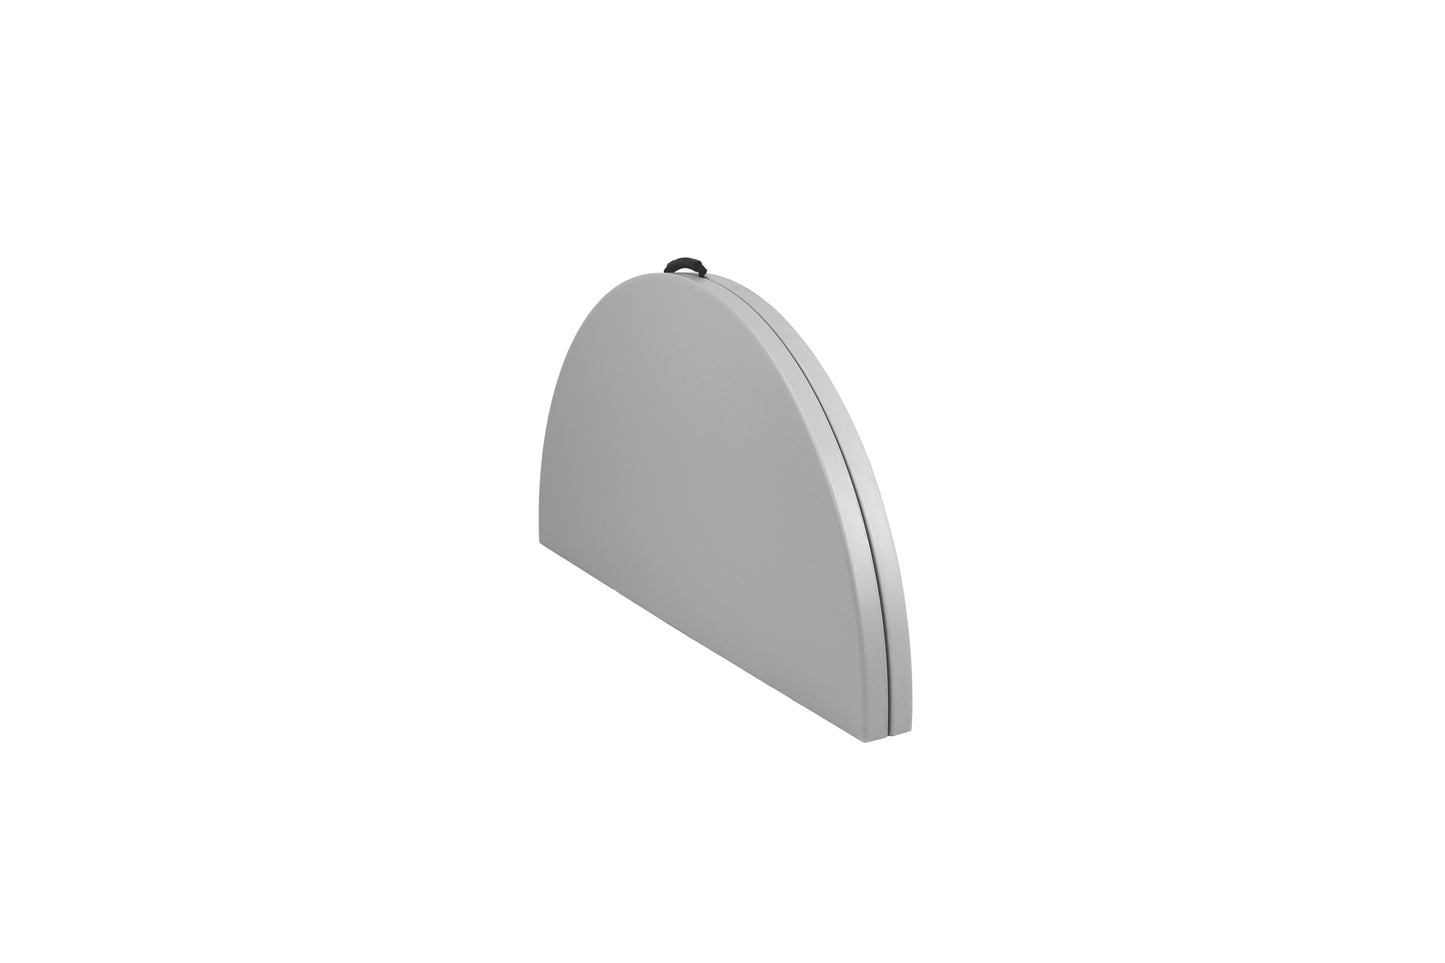 NPS Comfort Max Round Fold-In-Half Plastic Picnic Table 60" Diameter 29.5" H (CMFIH60R)